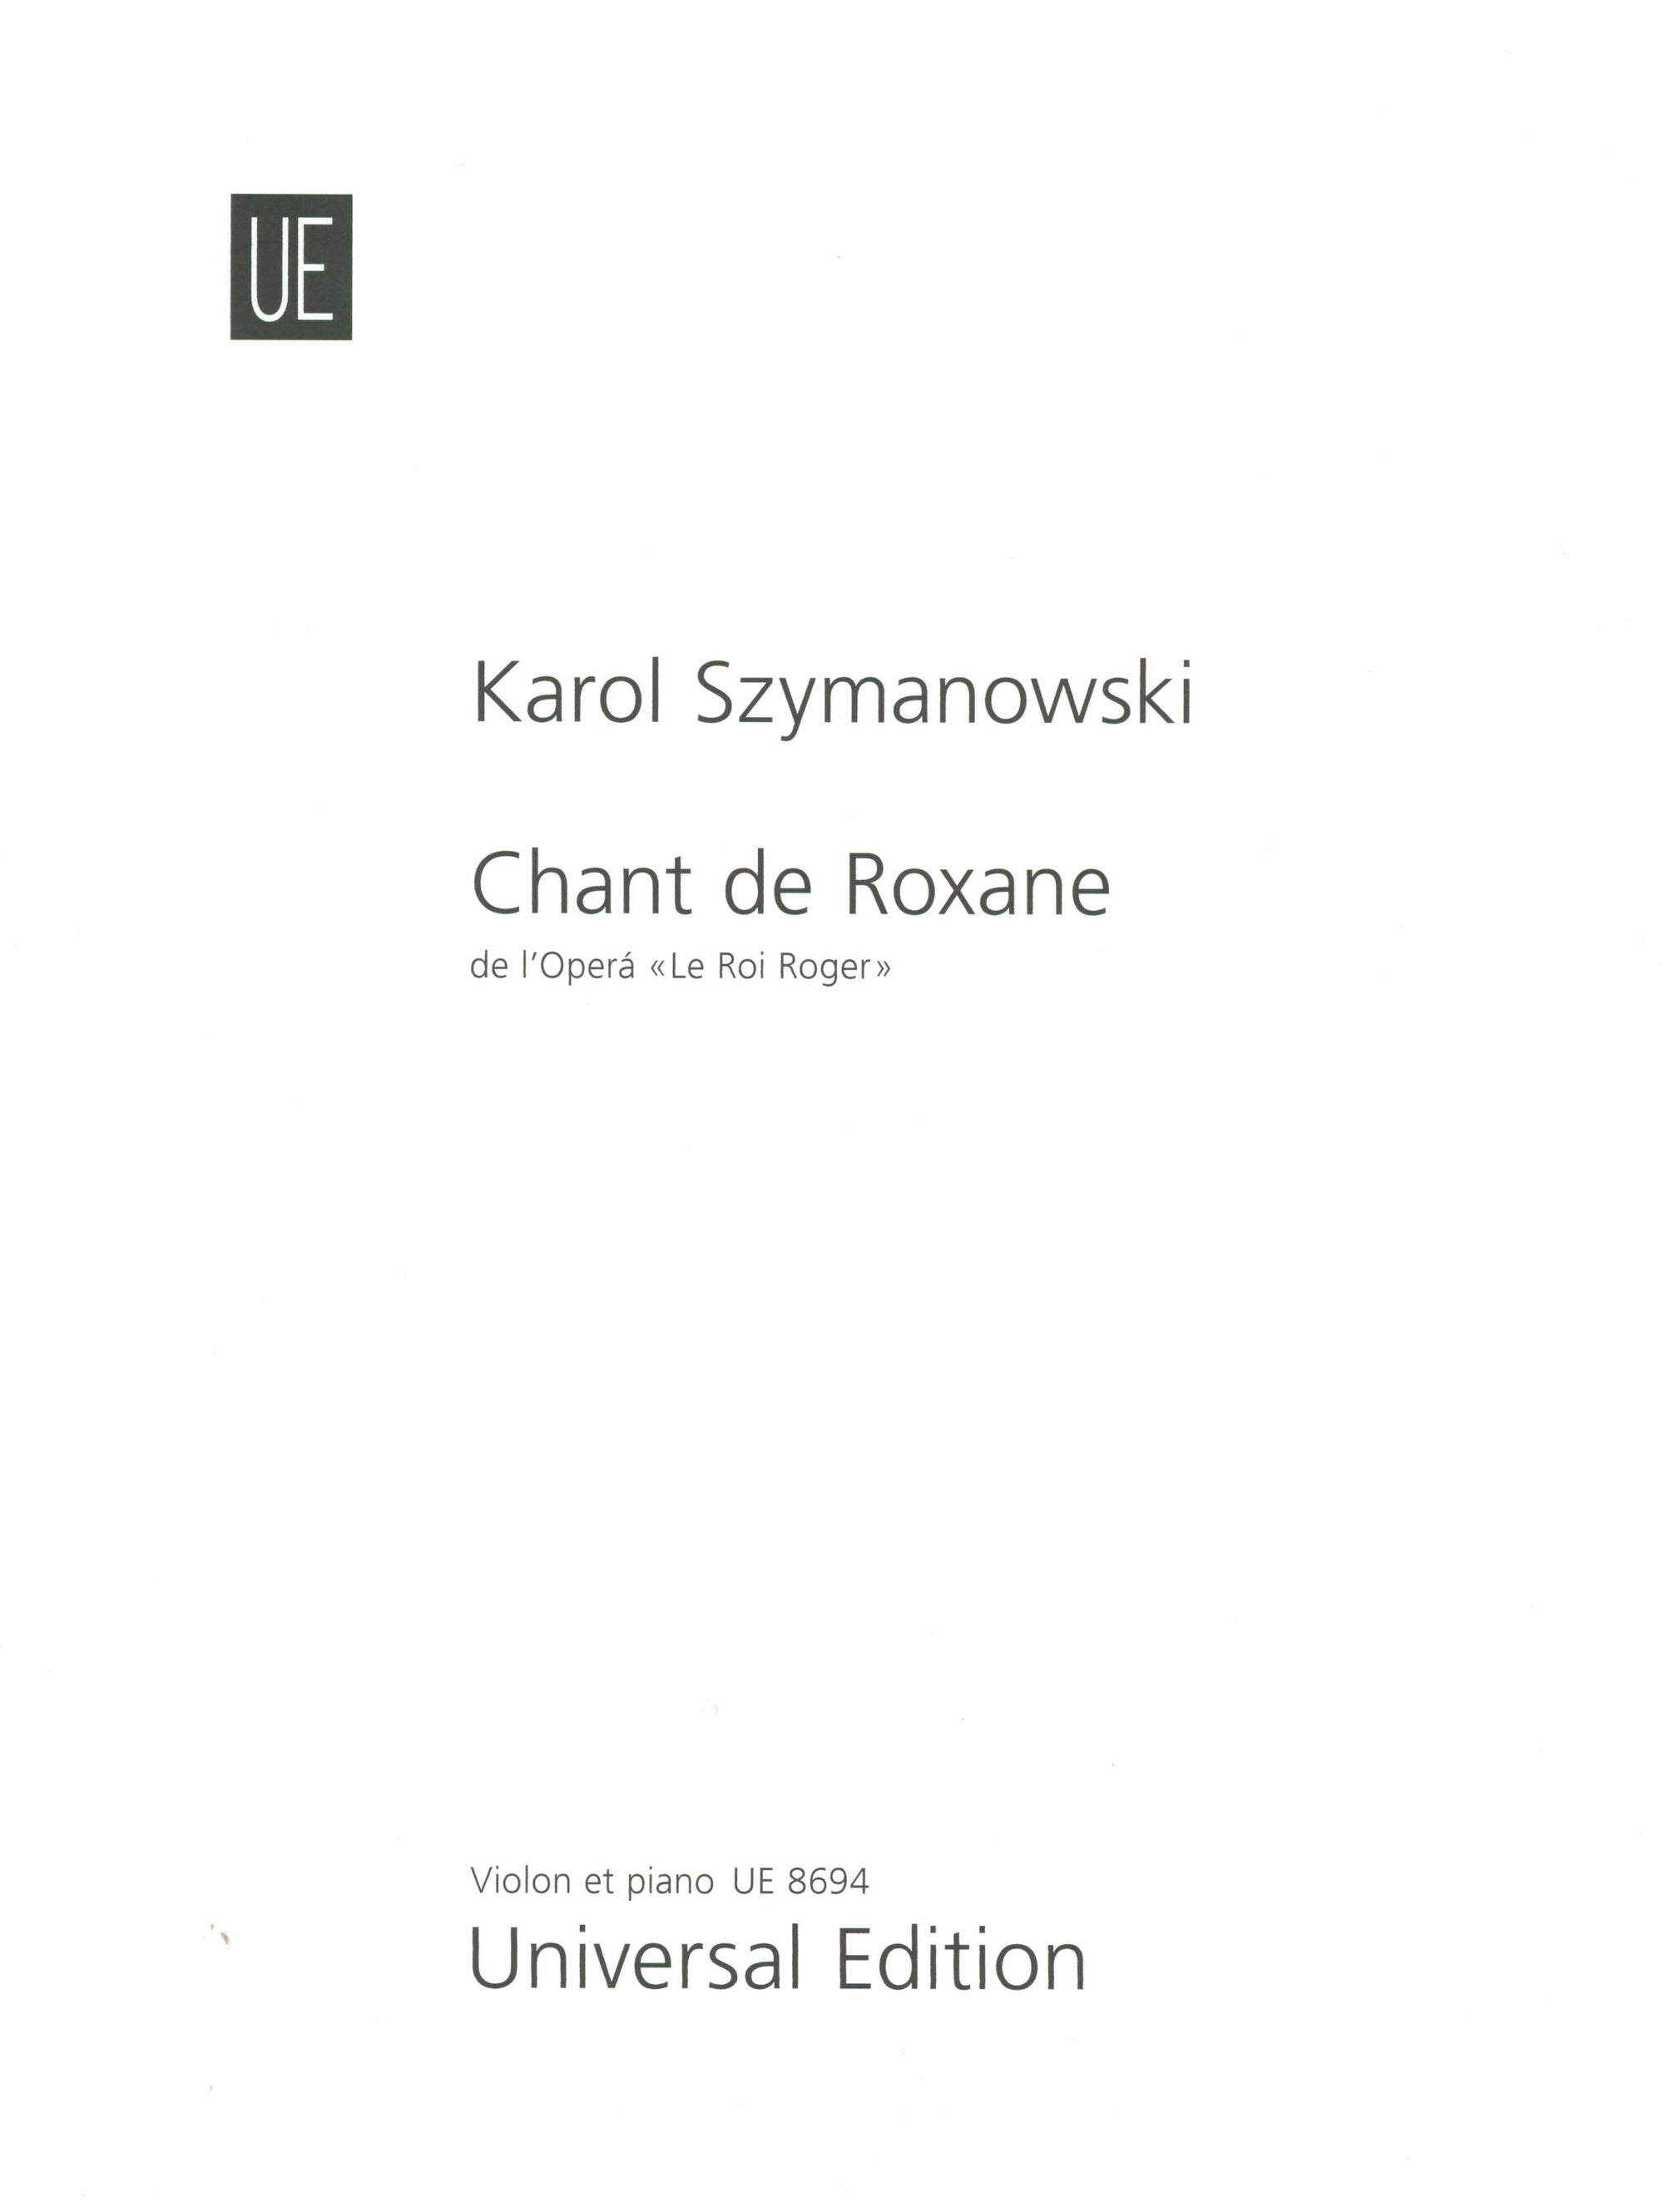 Szymanowski: Chant De Roxane from "King Roger"